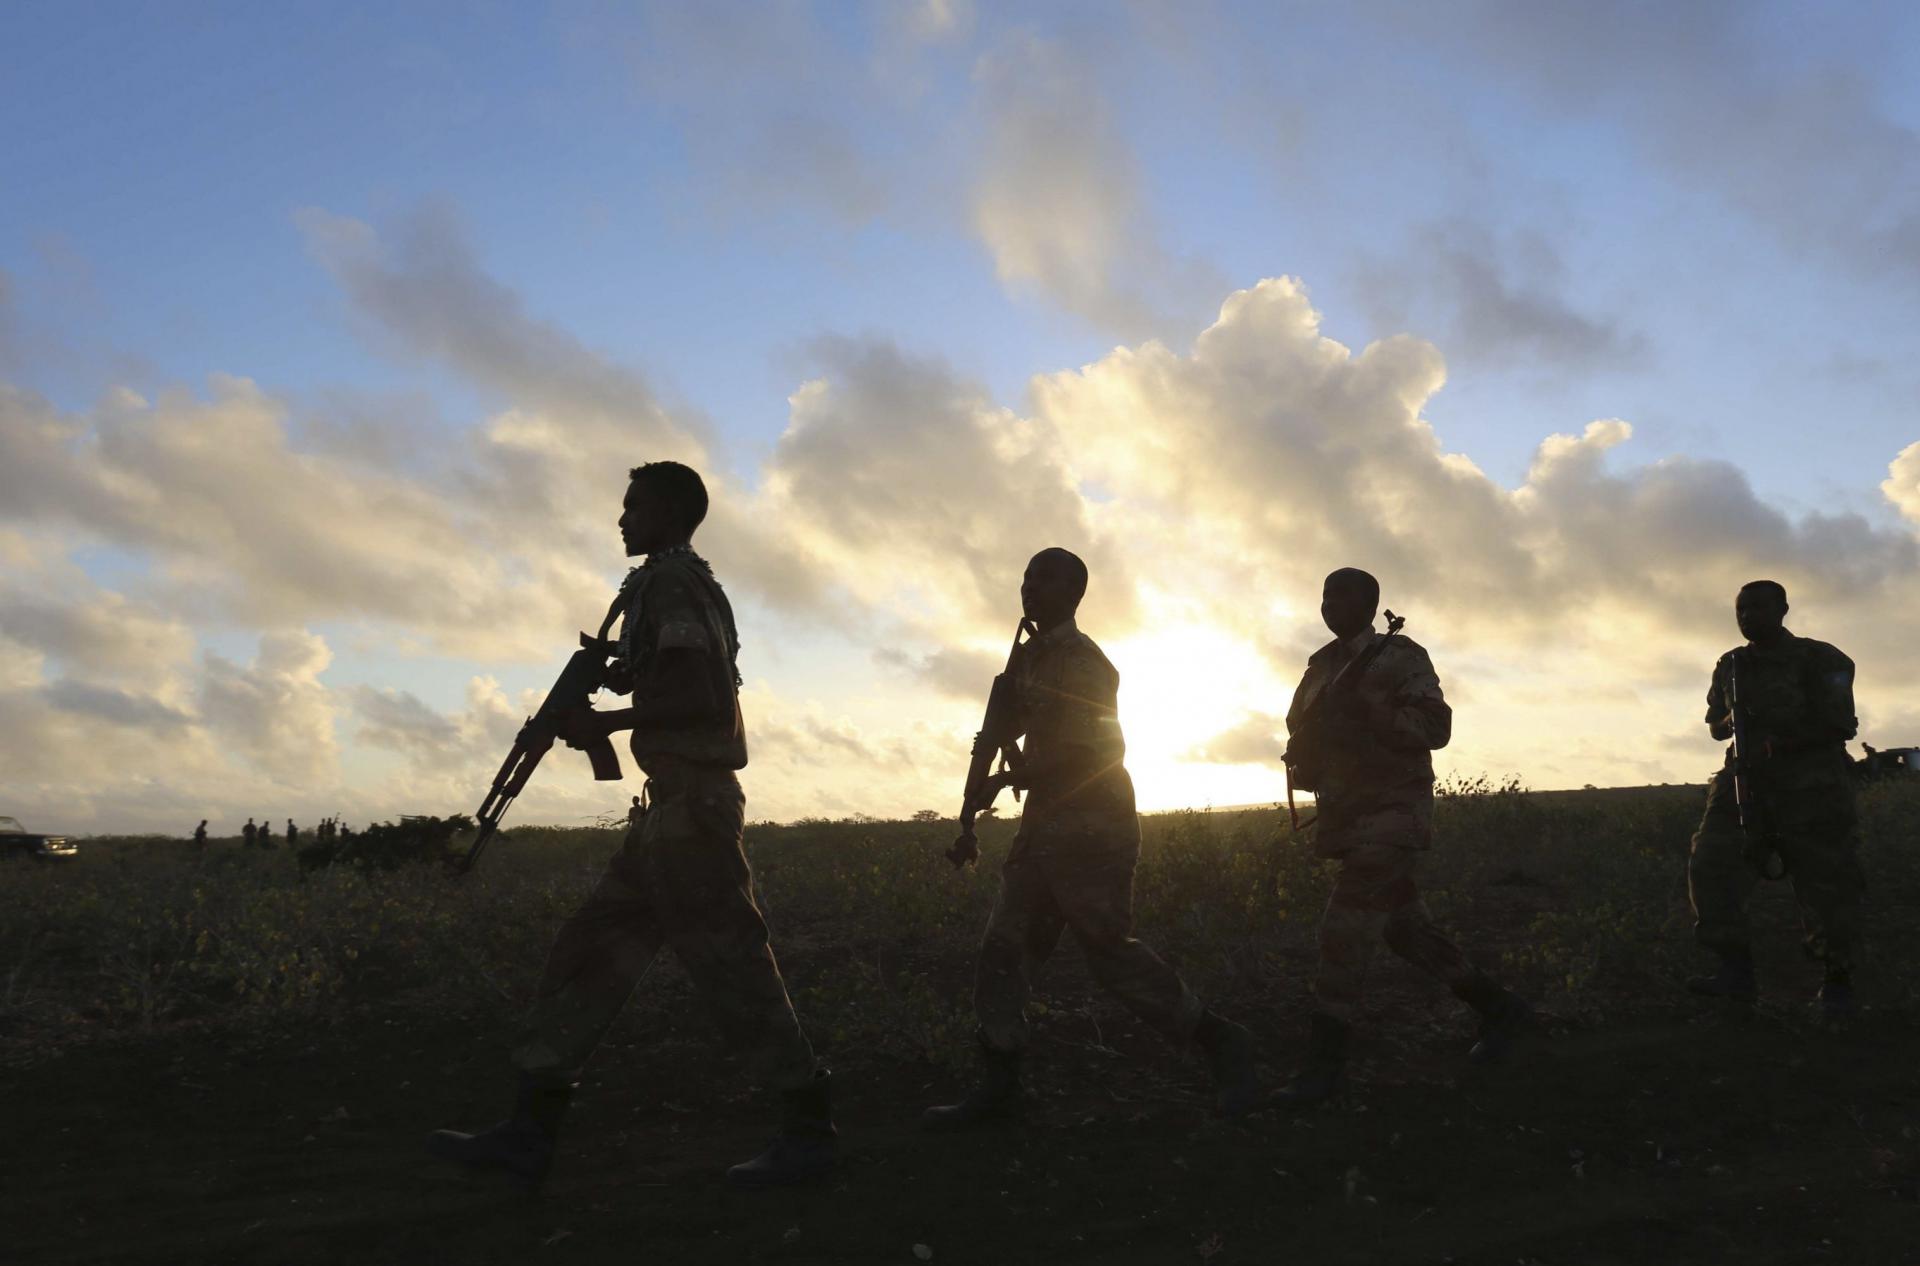 Nairobi accused Somali soldiers of violating Kenya's sovereignty